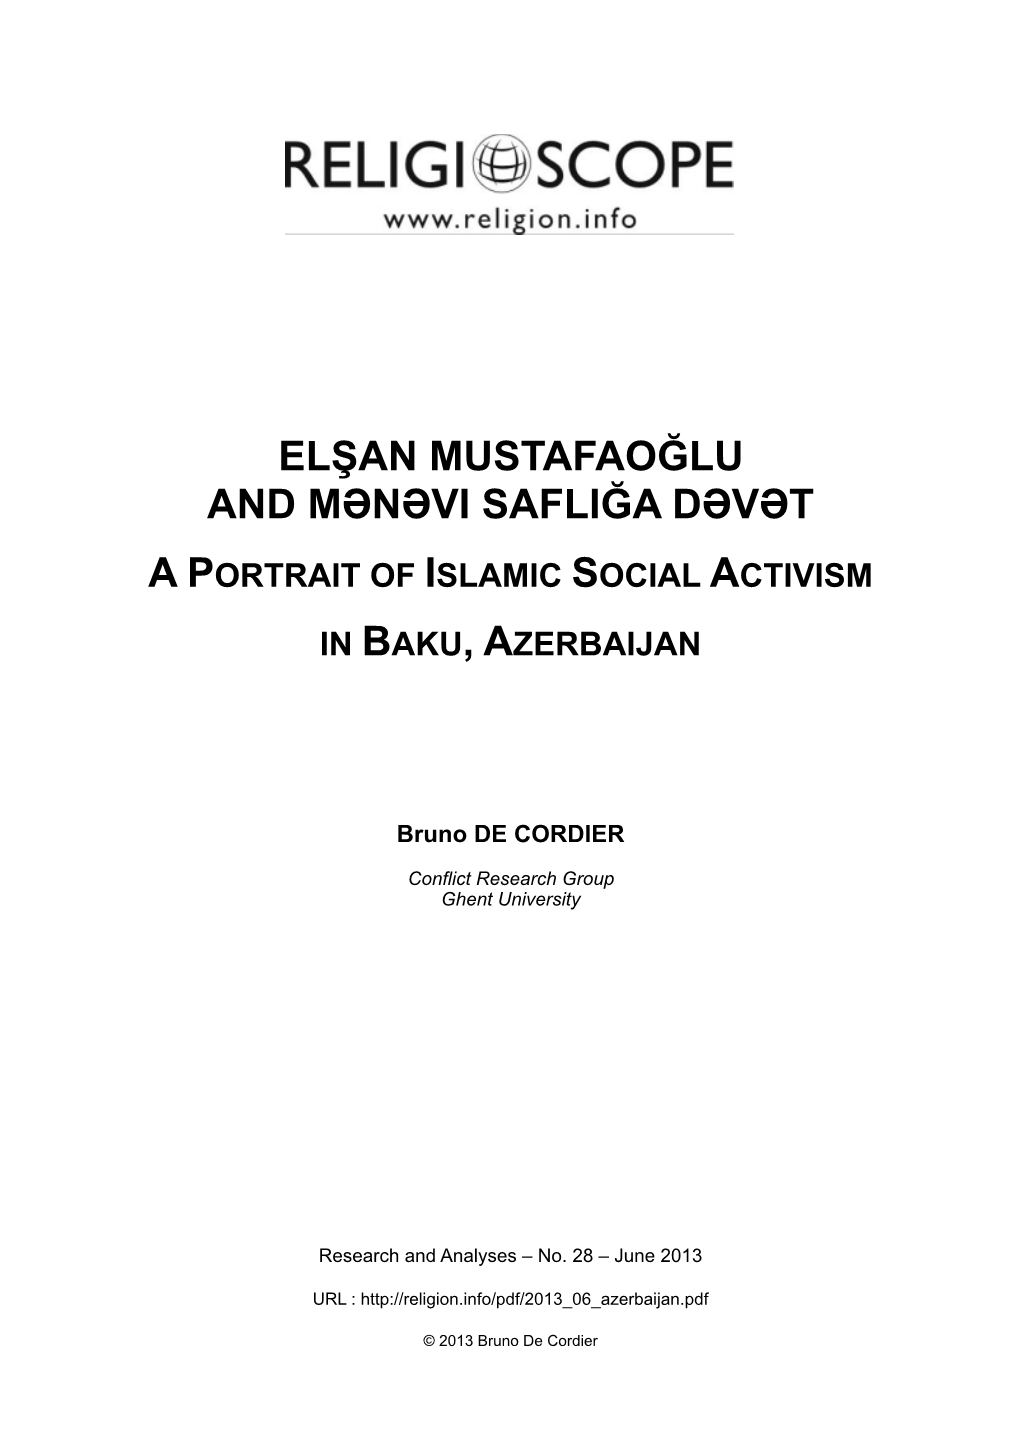 AZERBAIJAN: Elshan Mustafaoglu and Menevi Saflig Devet ̶ A